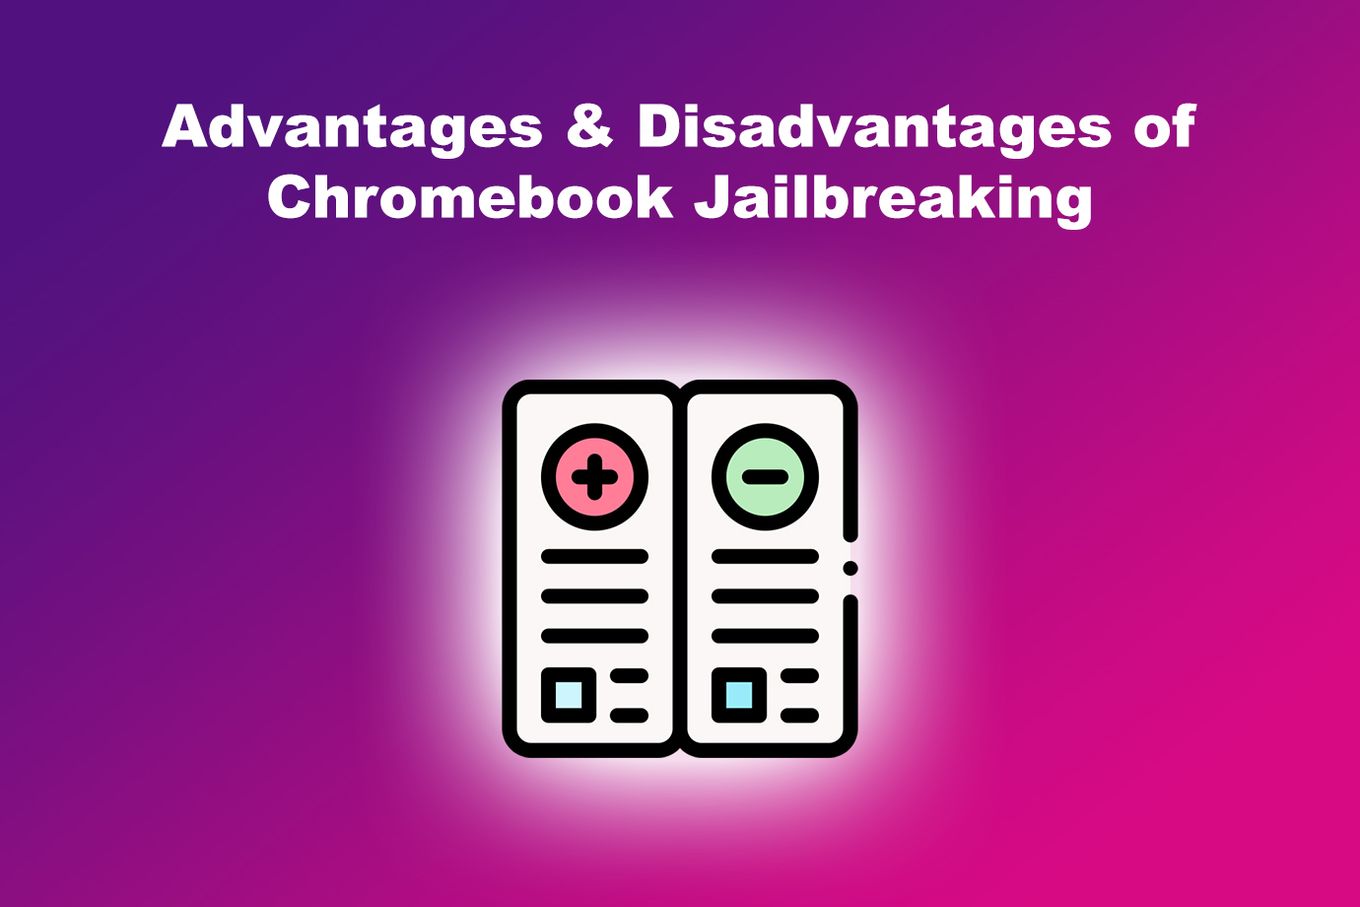 Advantages & disadvantages of Chromebook jailbreaking